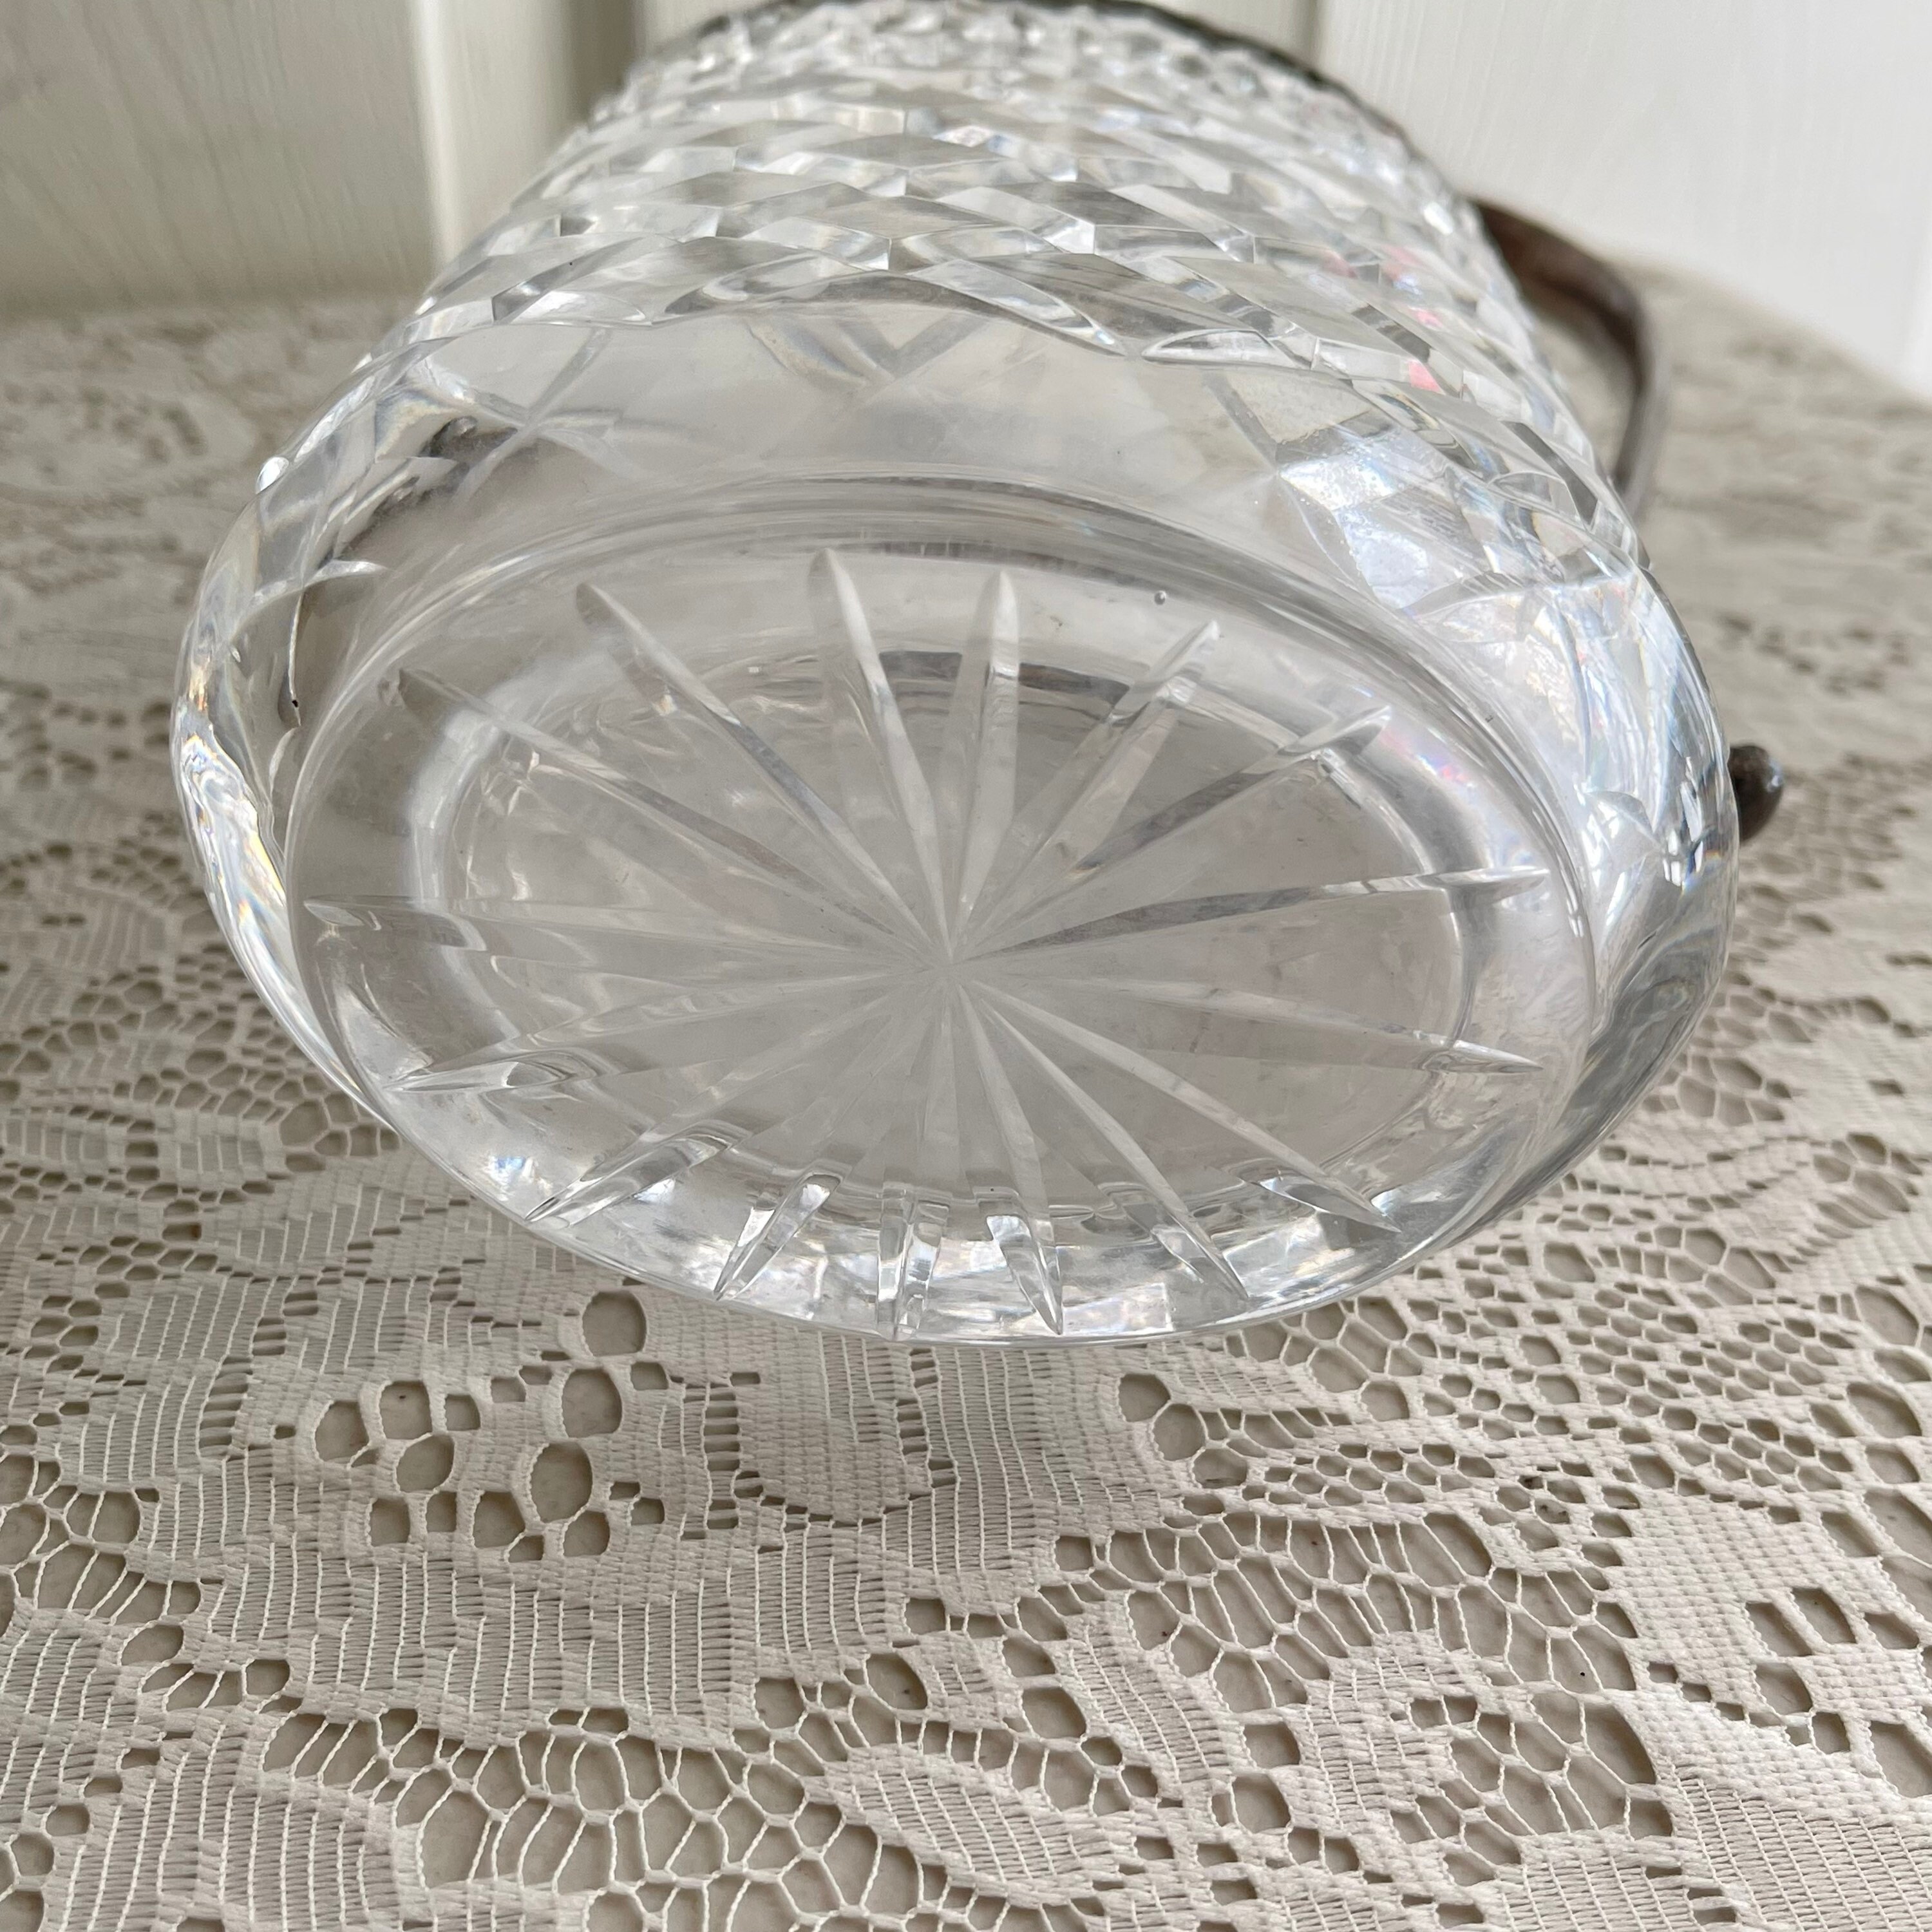 Crystal Glass Diamond Cut & Silverplated Top Lid, Handle Claret Jug Ewer  Decanter Wine Pitcher Circa 1930s-1940s Barware Heavy 